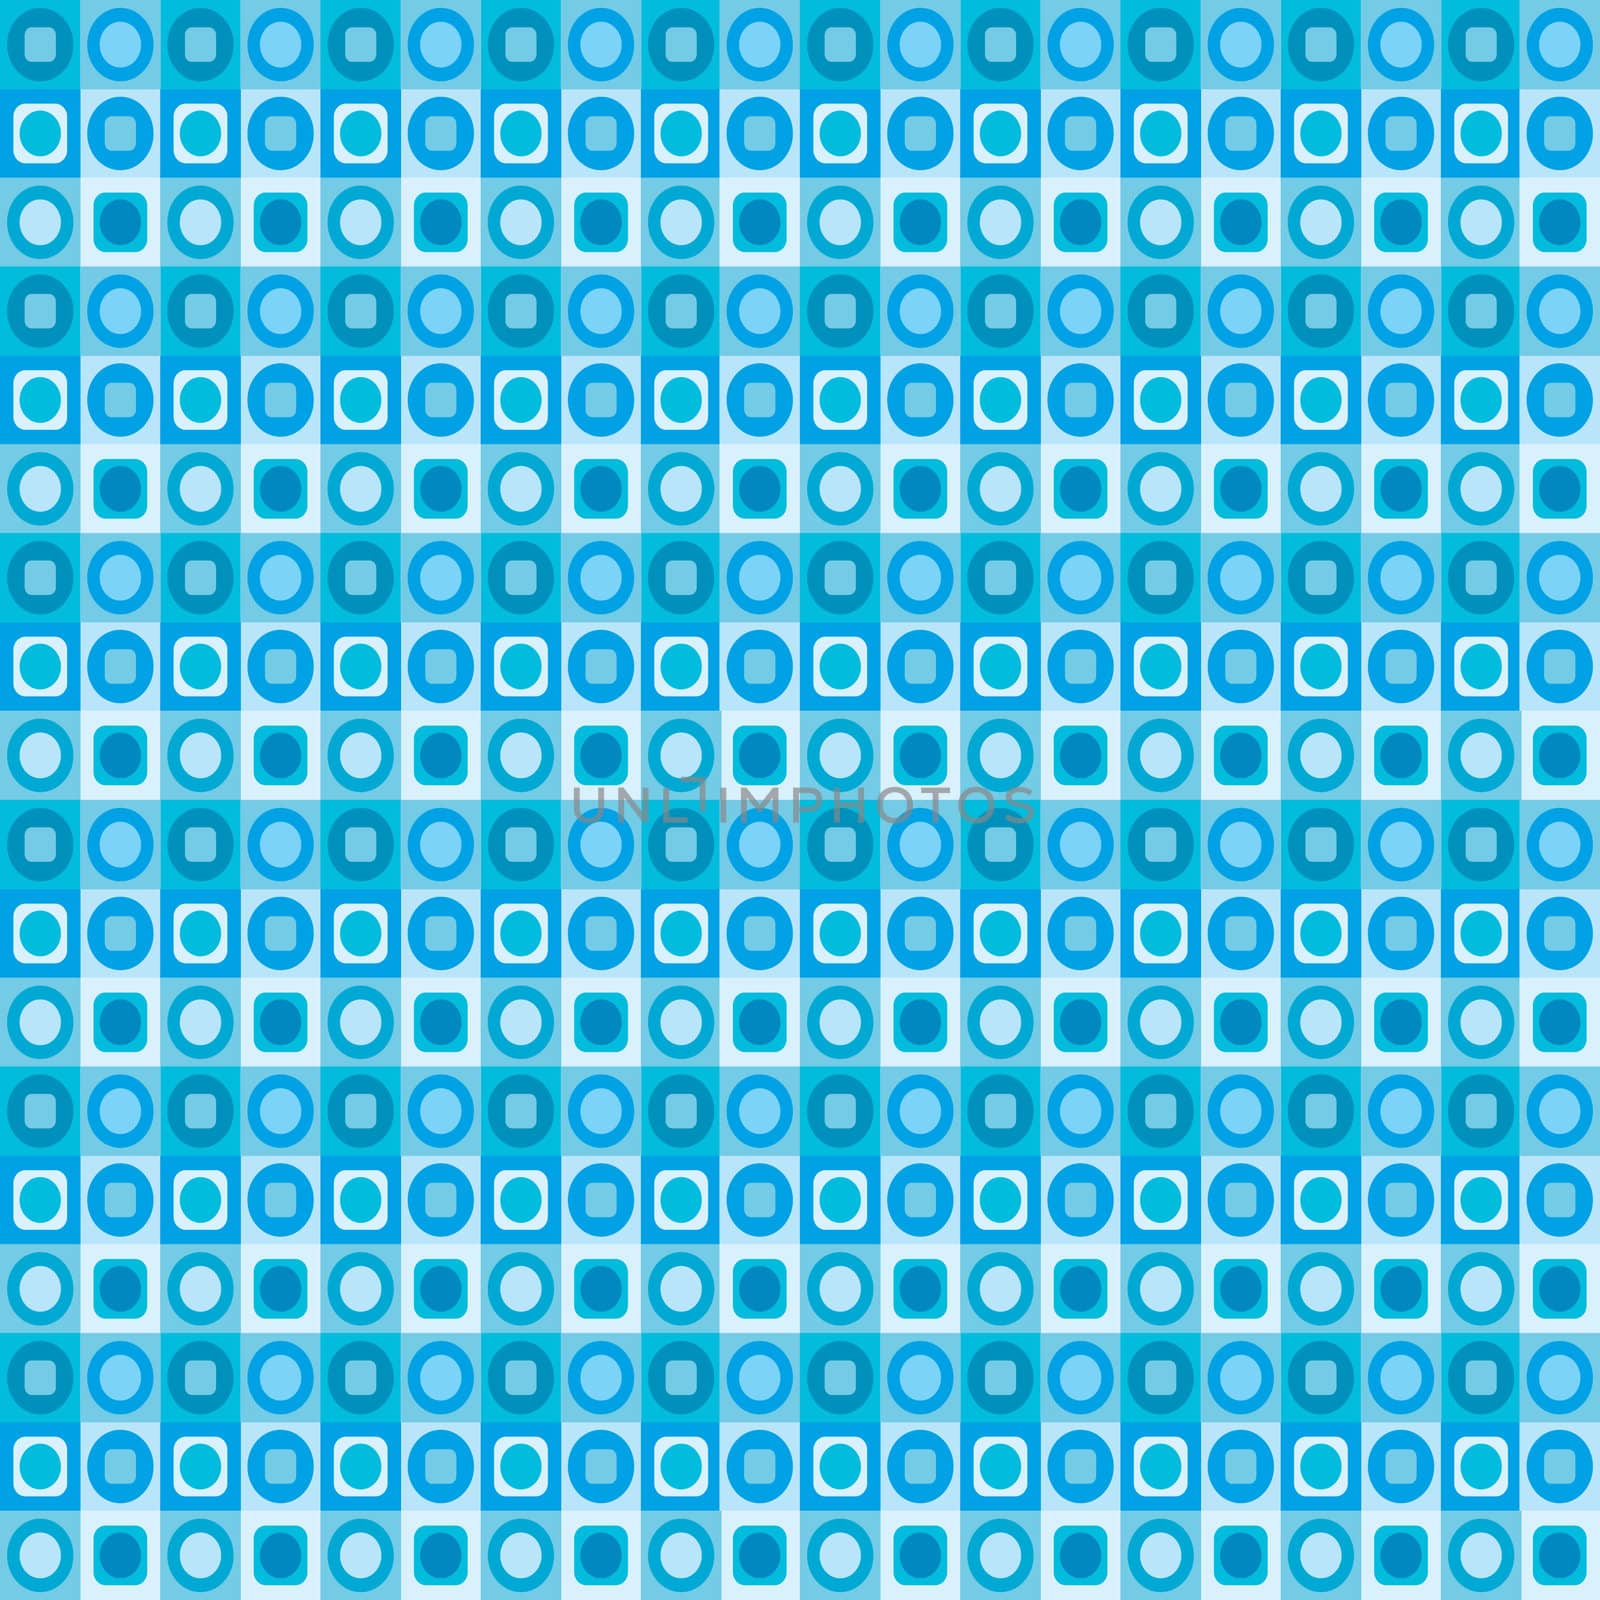 Geometrical blue seamless pattern by hibrida13